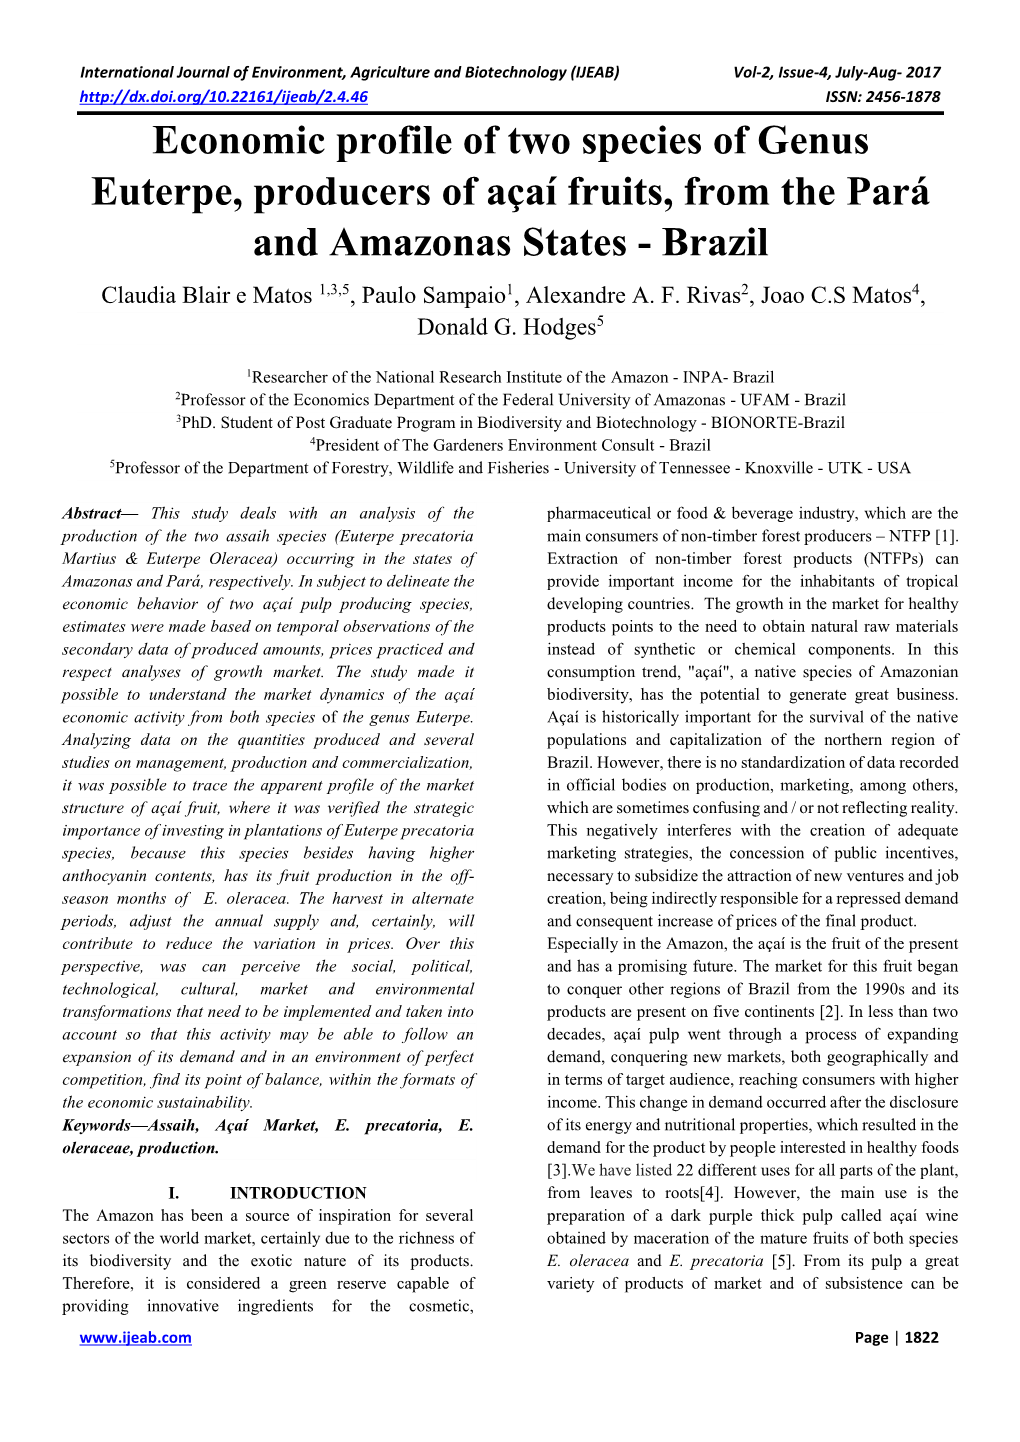 Economic Profile of Two Species of Genus Euterpe, Producers of Açaí